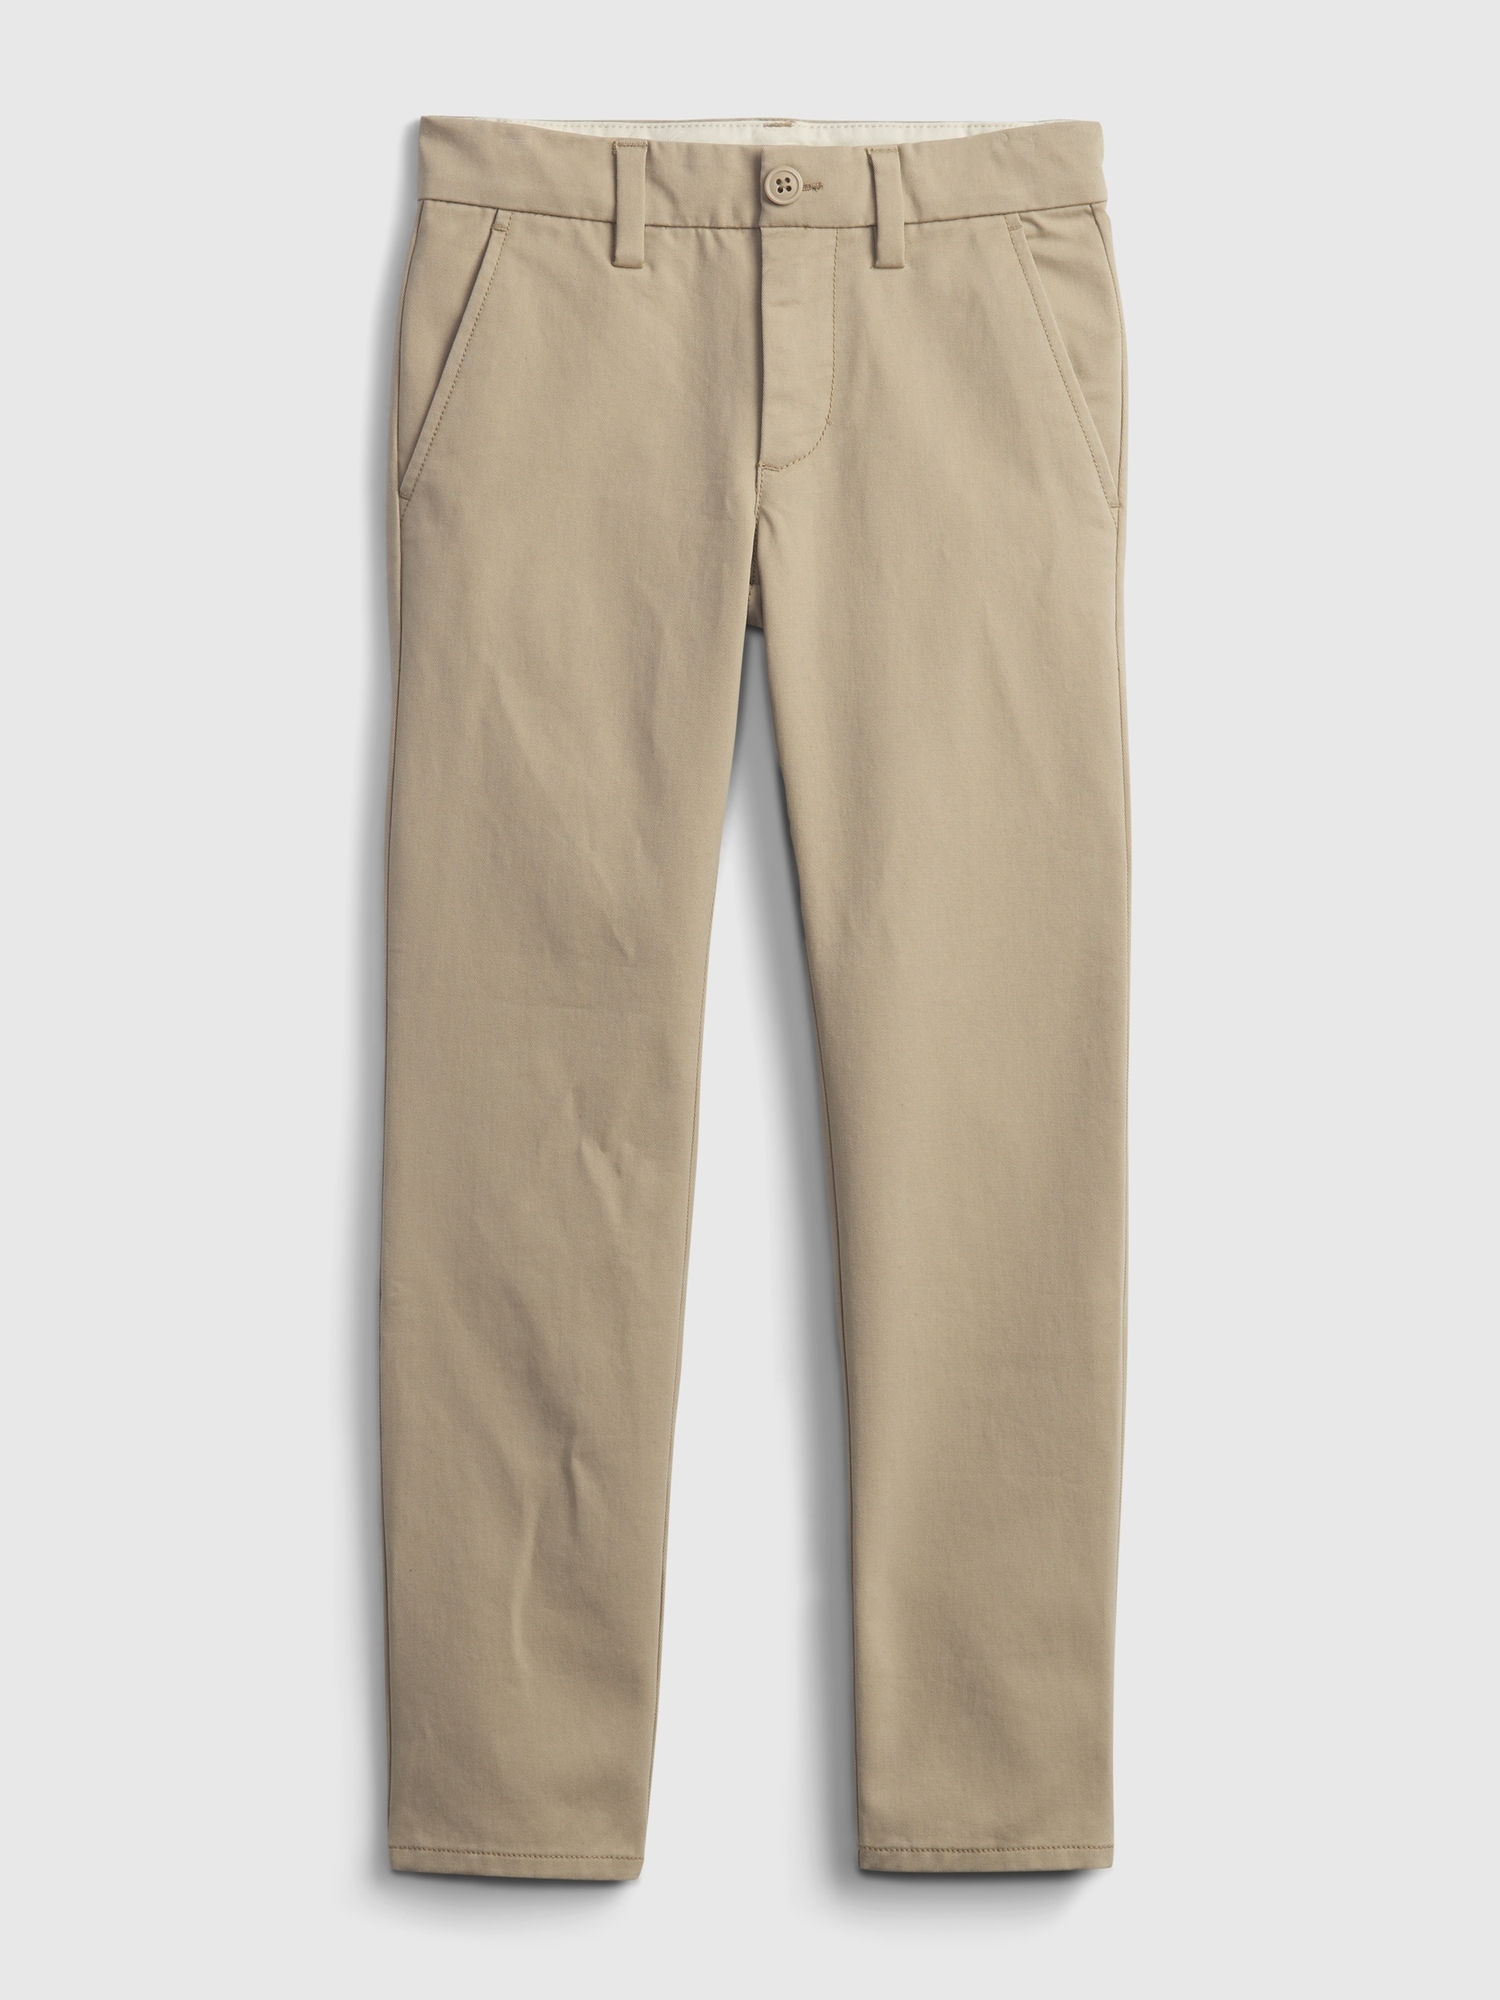 ASOS Boys Skinny Khaki Chino Pants Size 26x30 Cotton Blend Stretch | eBay